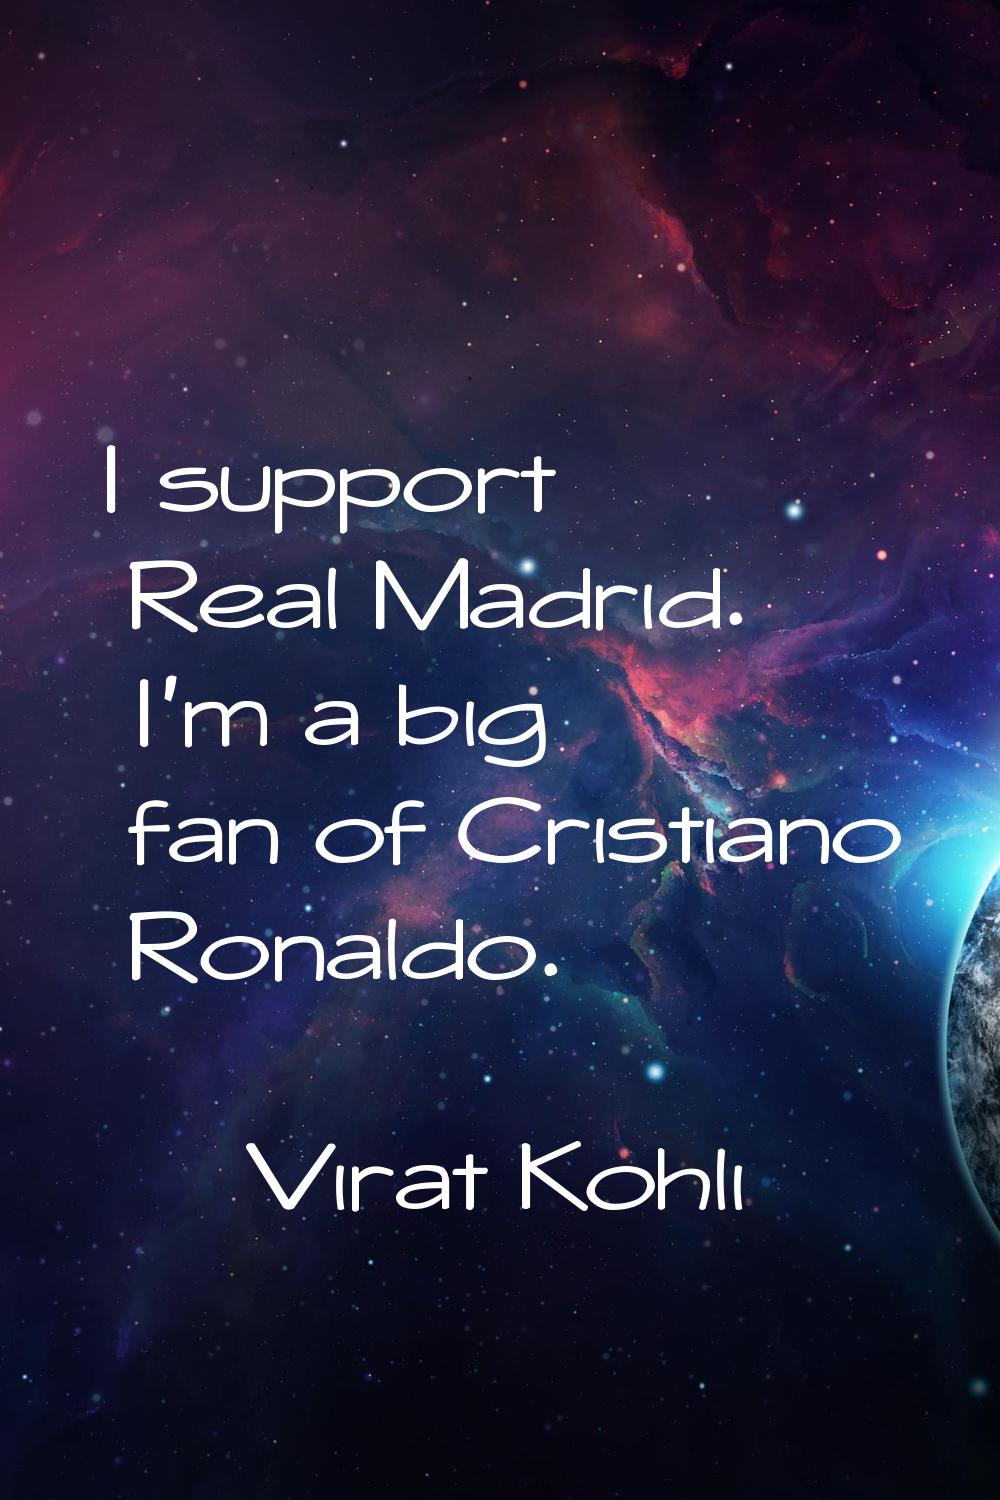 I support Real Madrid. I'm a big fan of Cristiano Ronaldo.